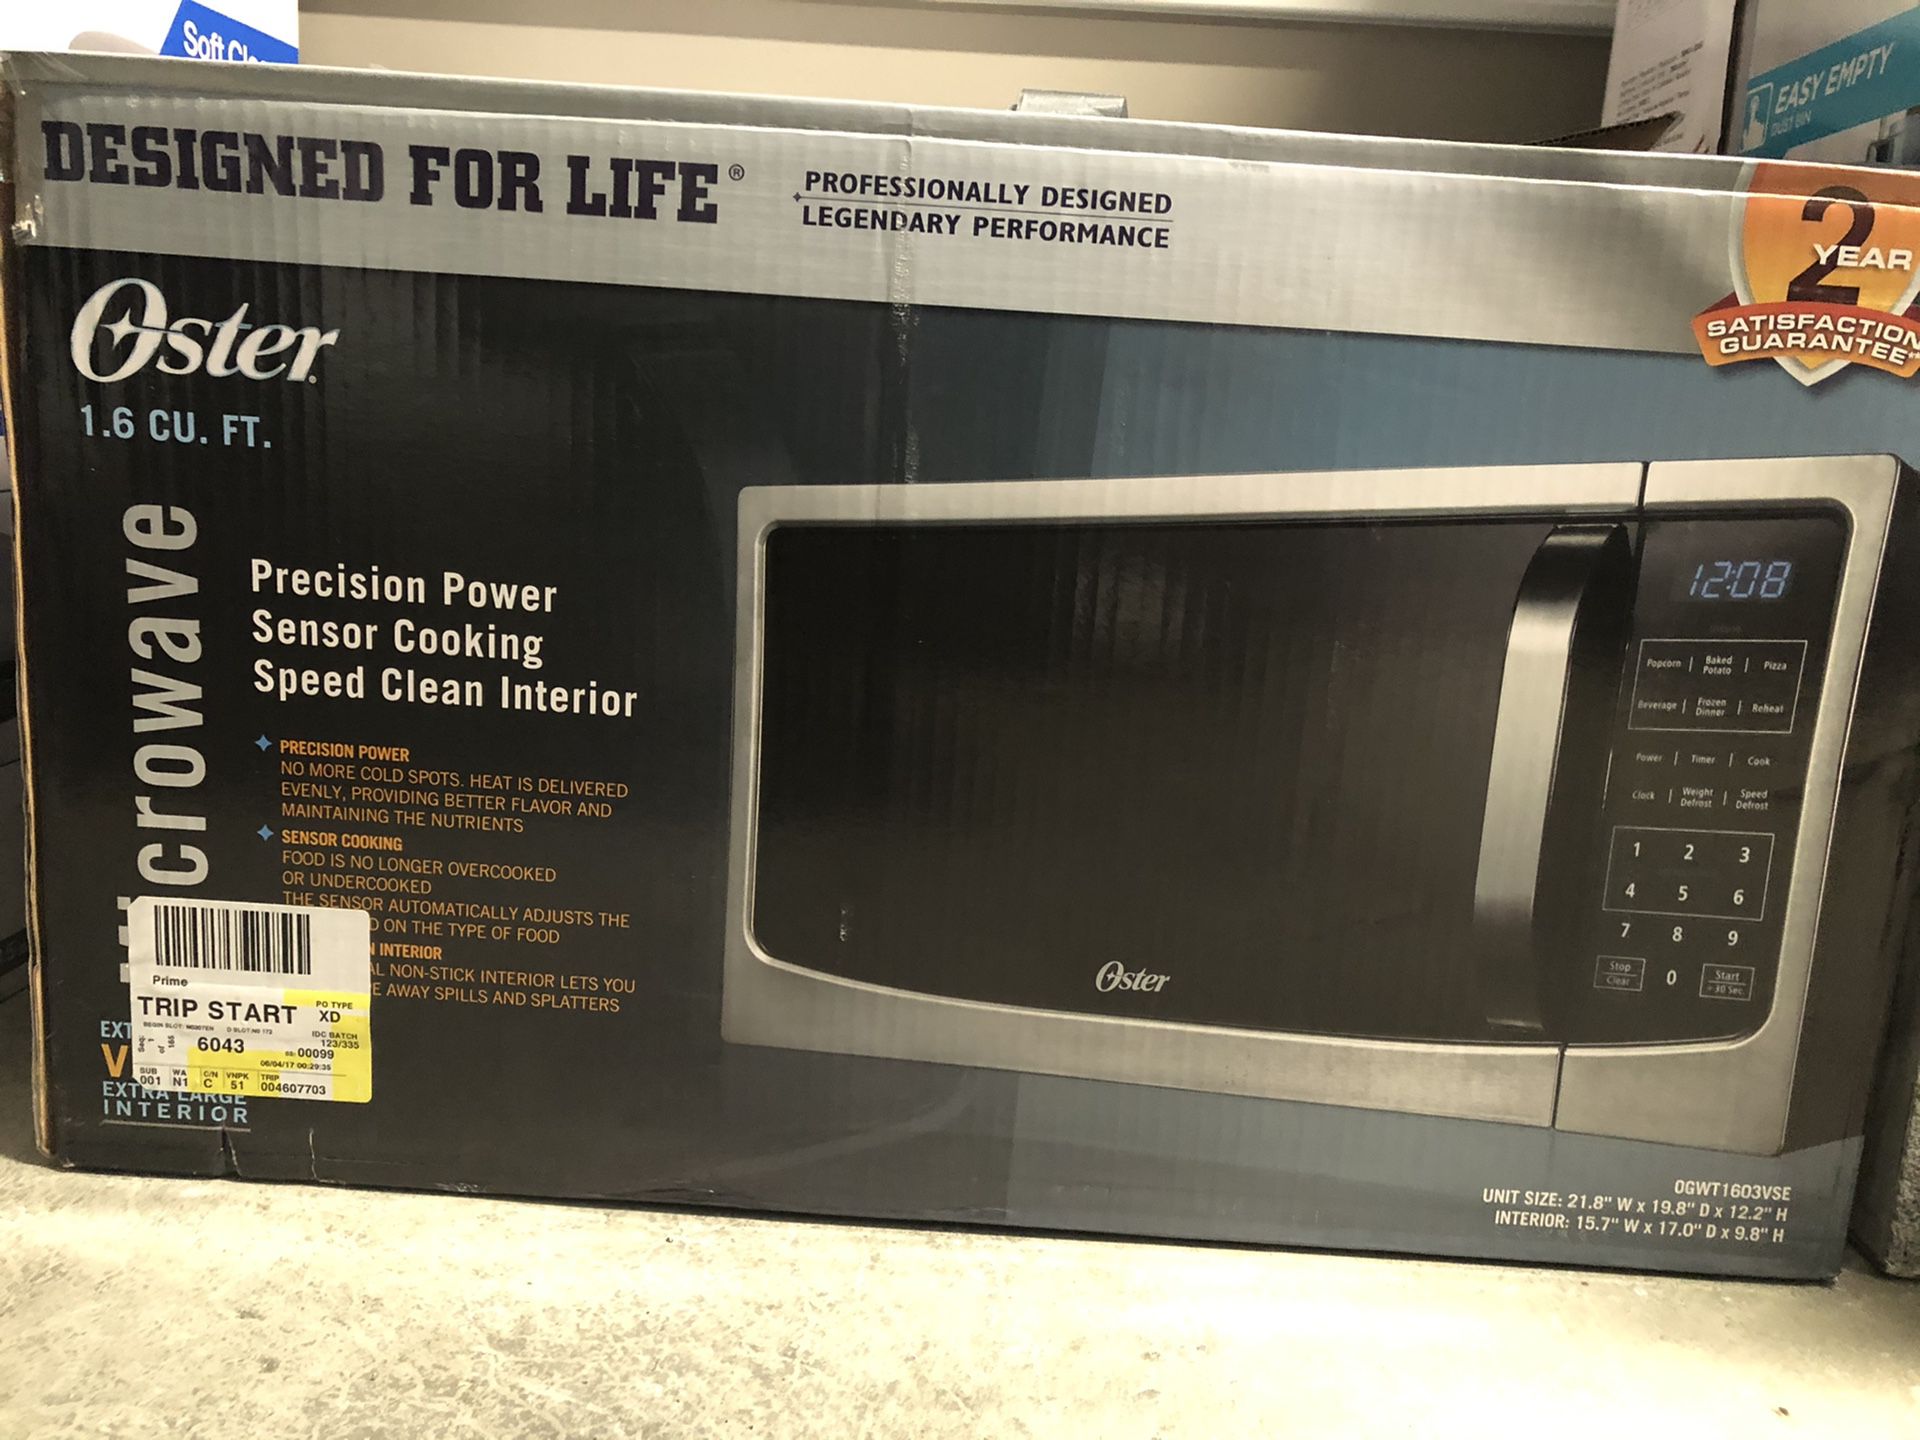 Oster microwave 1.6 cu. ft black